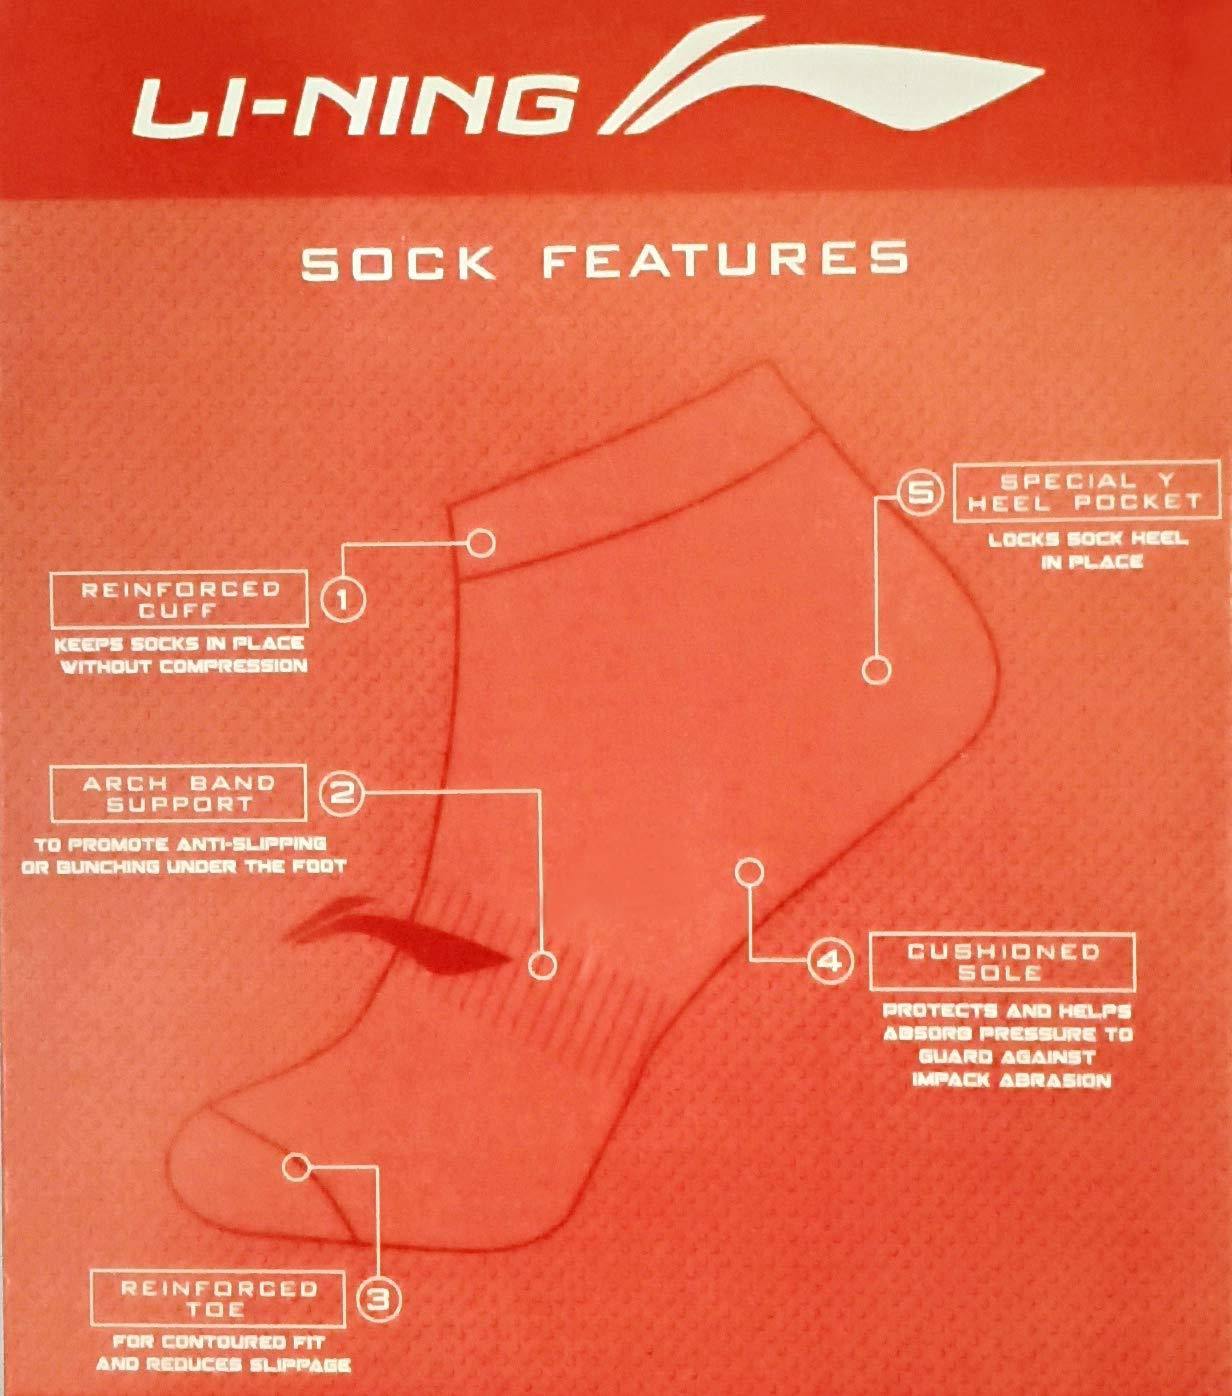 Li-Ning Cotton Men's Sports Socks, Ankle length, Pack of 3, Black - Best Price online Prokicksports.com